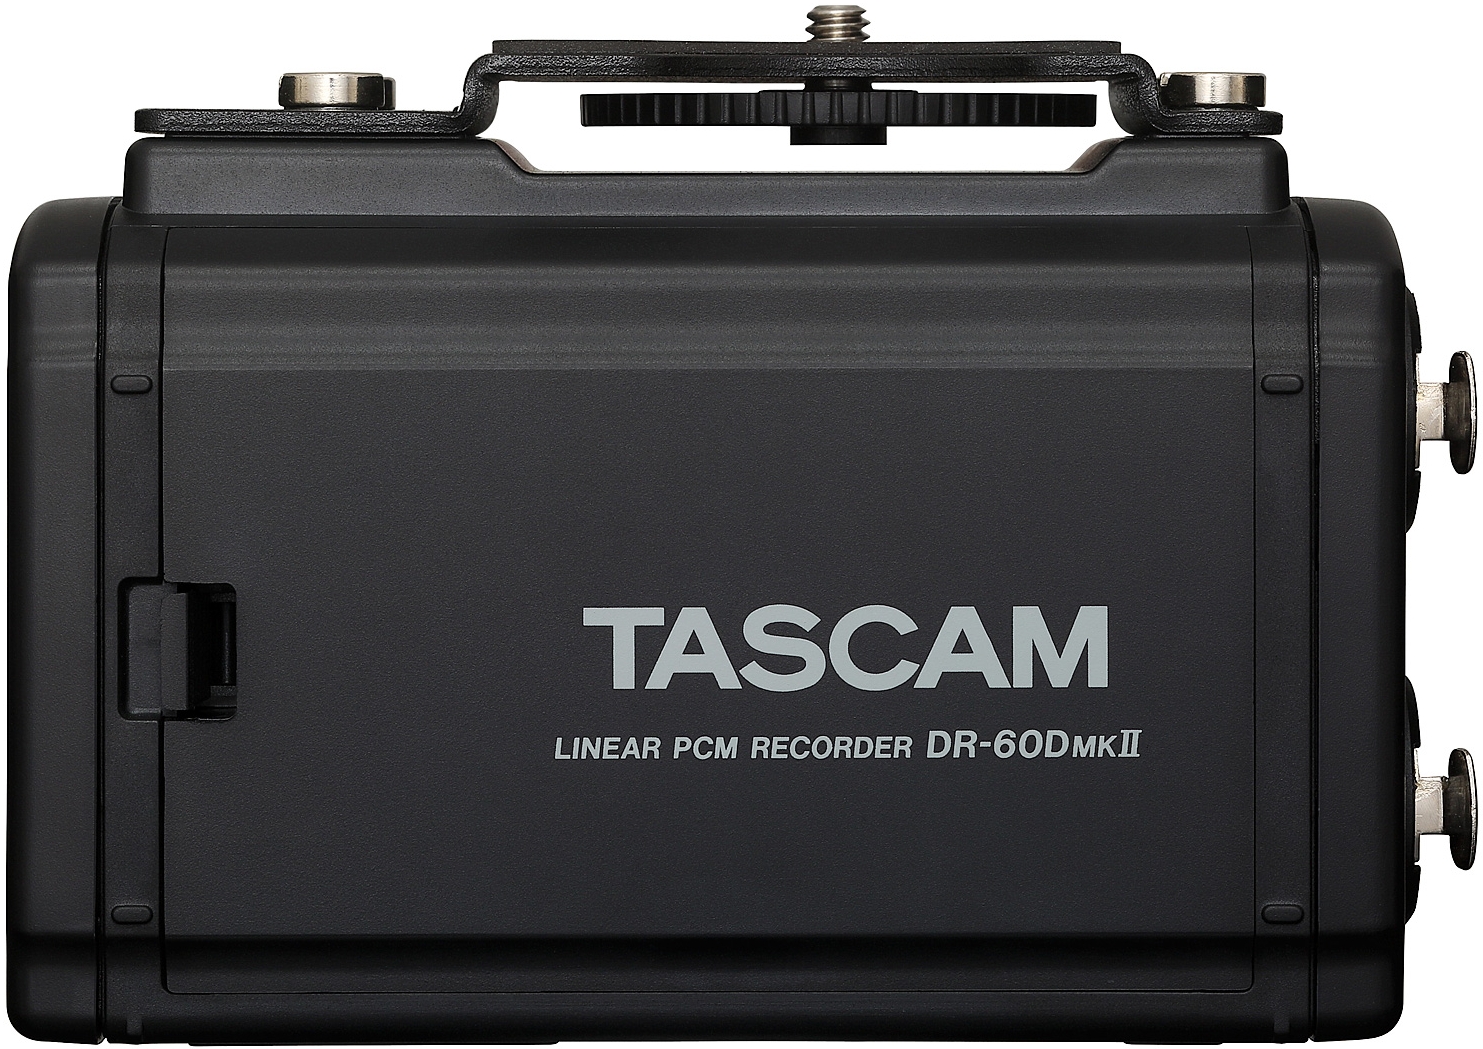 TASCAM DR-60DMK2 Enregistreur stereo PCM lineaire portable